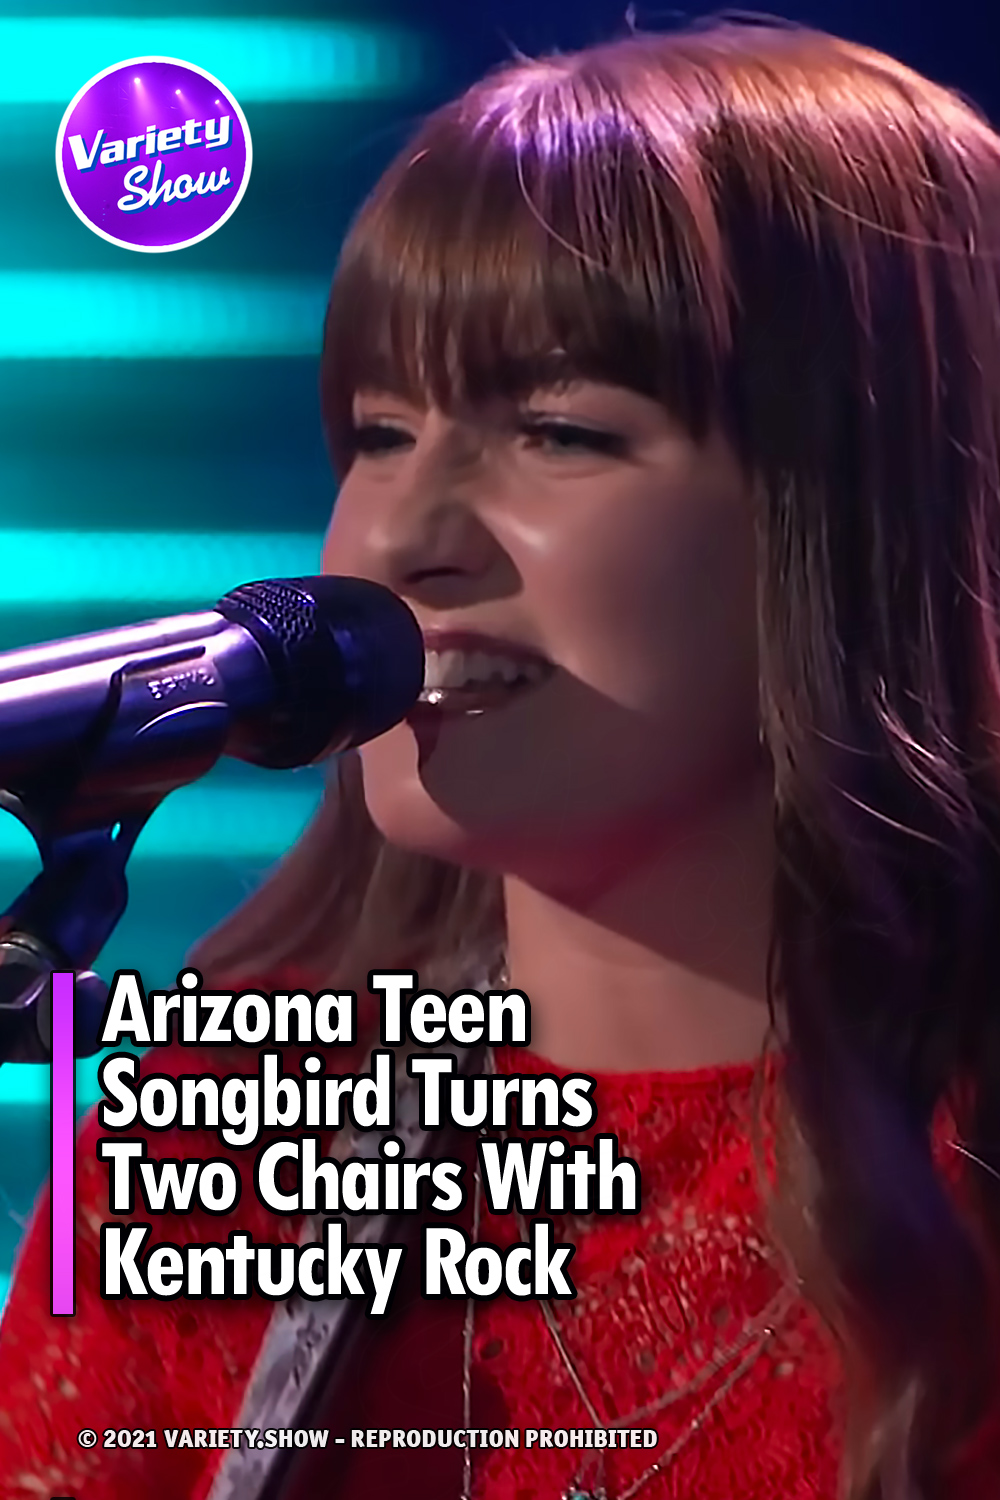 Arizona Teen Songbird Turns Two Chairs With Kentucky Rock